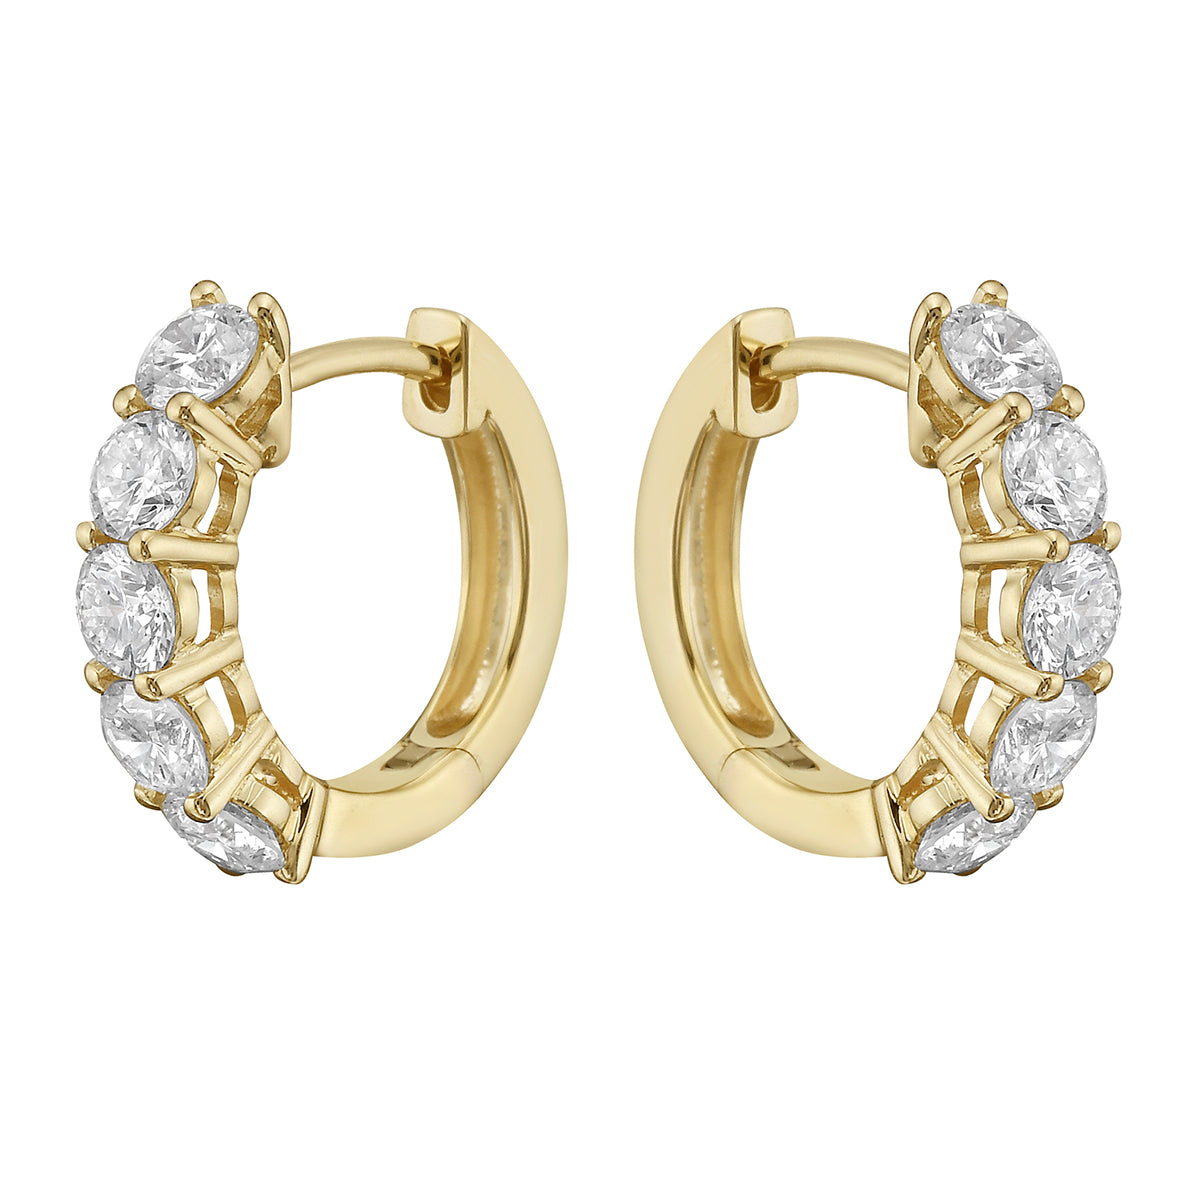 14K Yellow Gold Five-Stone Diamond Hoop Earrings - Large